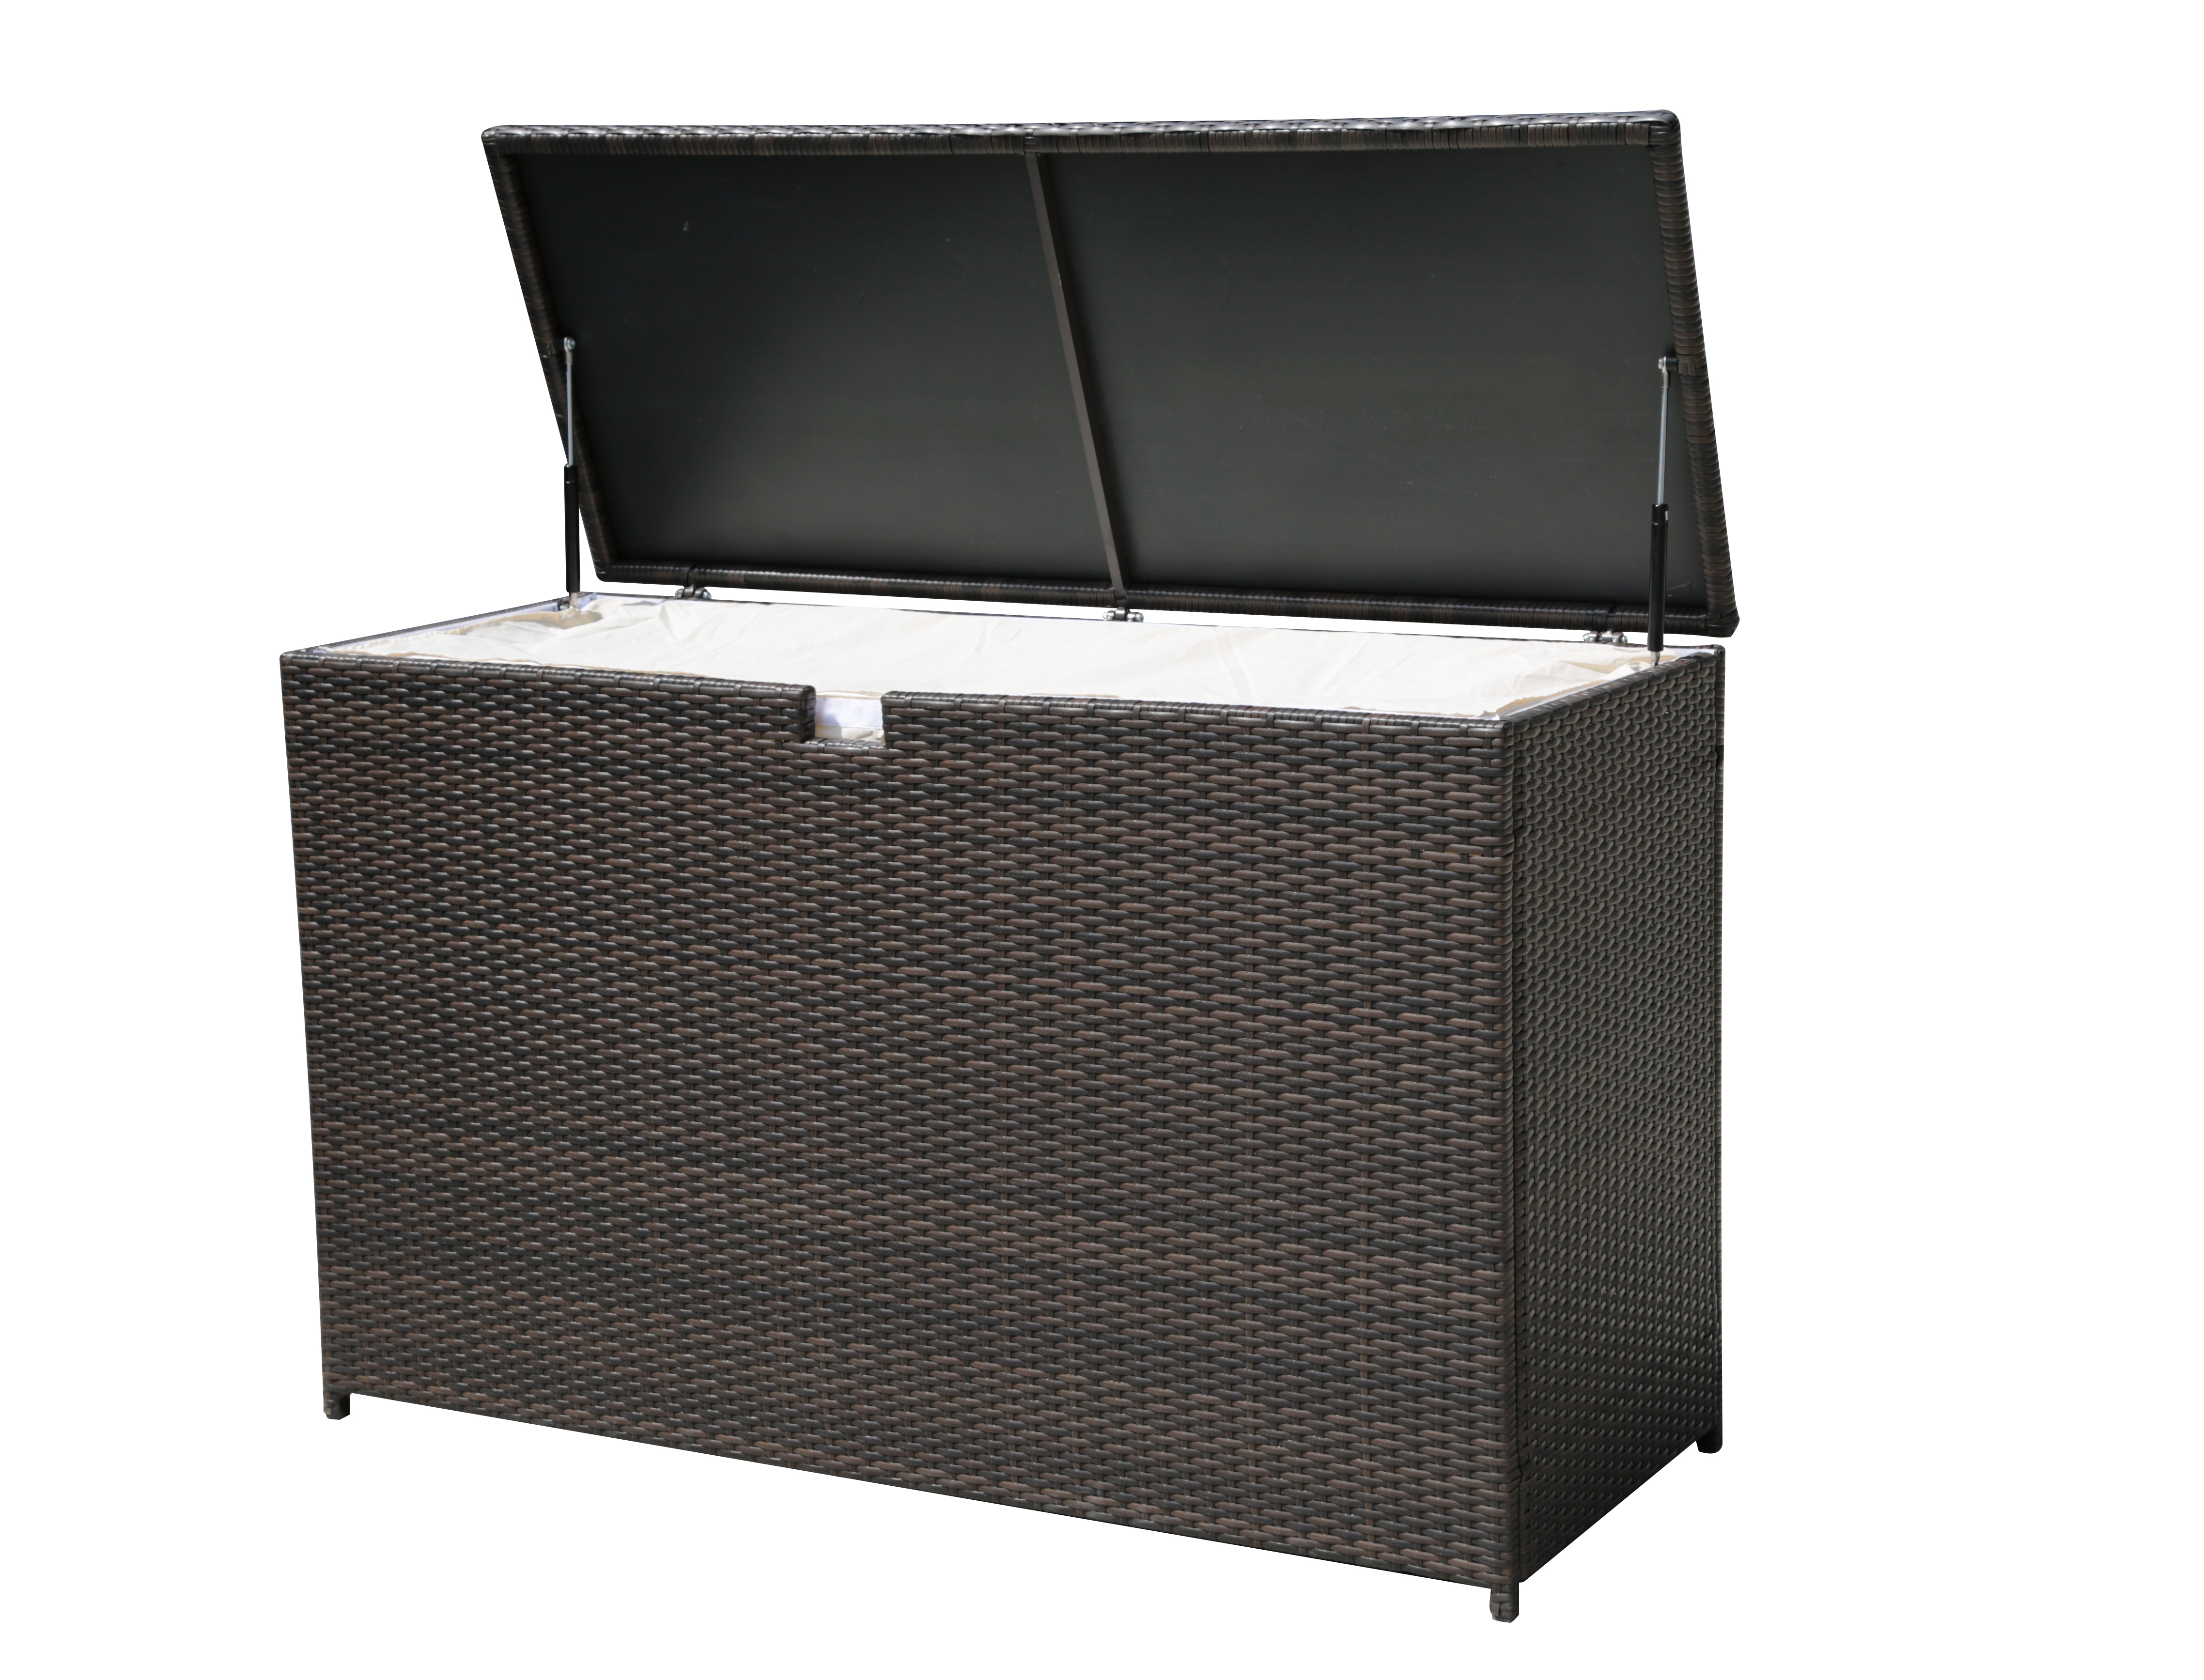 Outdoor Patio Aluminum Frame Wicker Cushion Storage Bin Deck Box pertaining to measurements 4550 X 3468